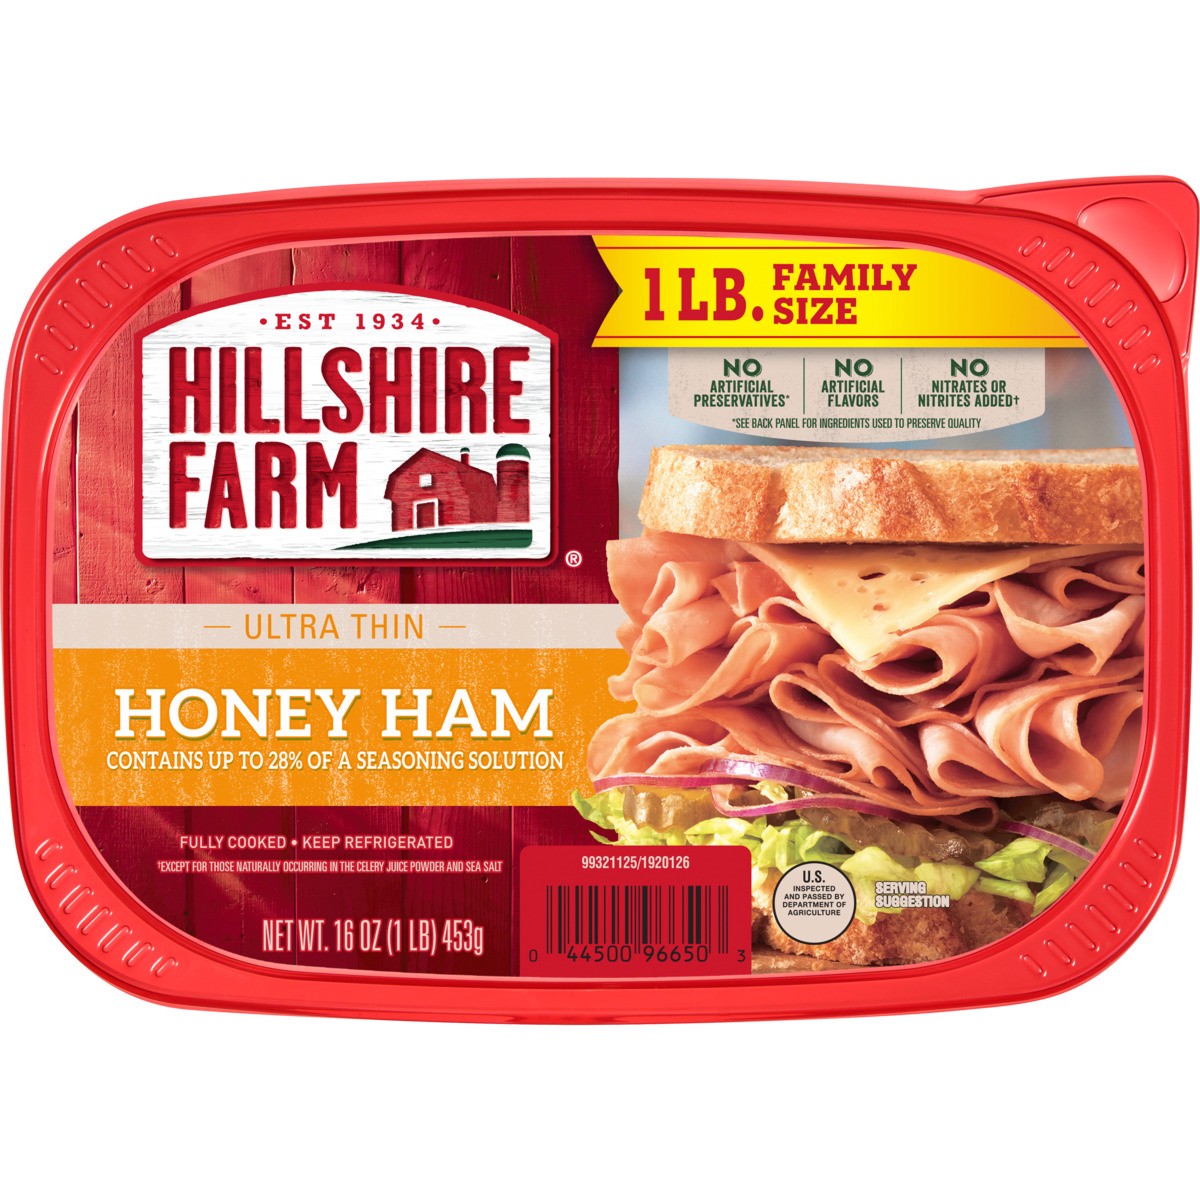 slide 5 of 5, Hillshire Farm™ ultra thin honey ham, family size, 16 oz